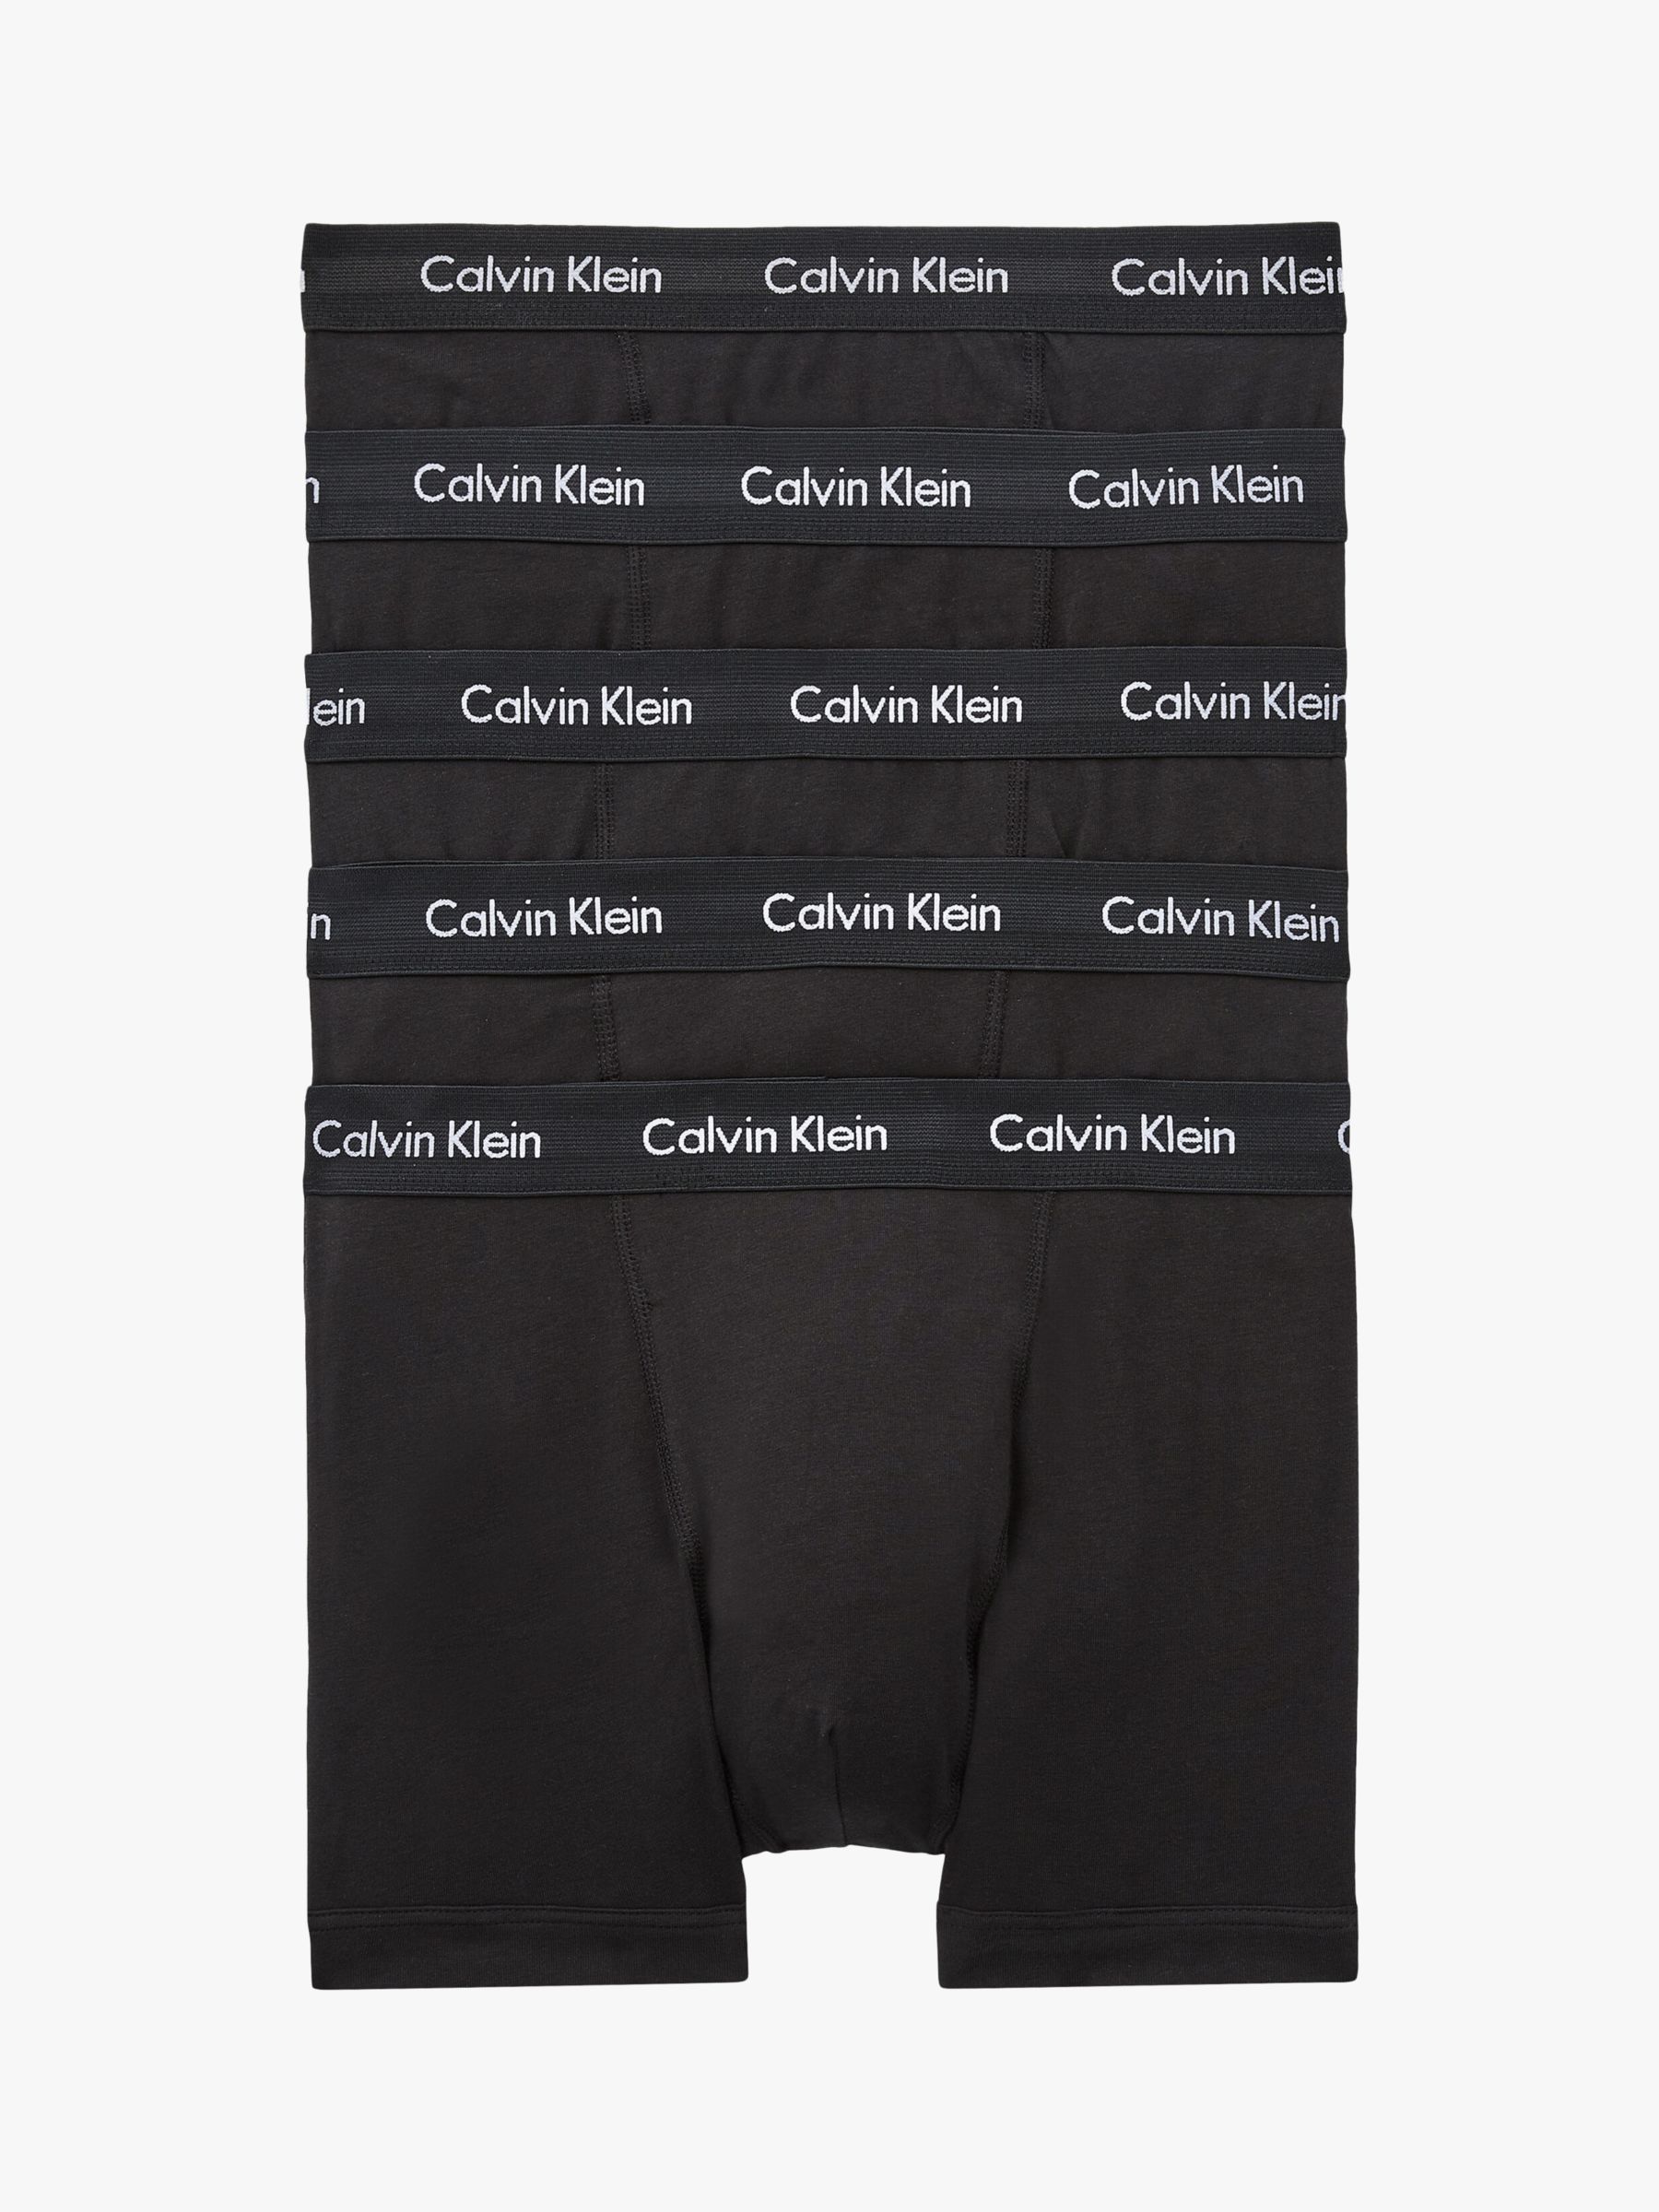 Buy Calvin Klein Regular Cotton Stretch Trunks, Pack of 5, Black Online at johnlewis.com